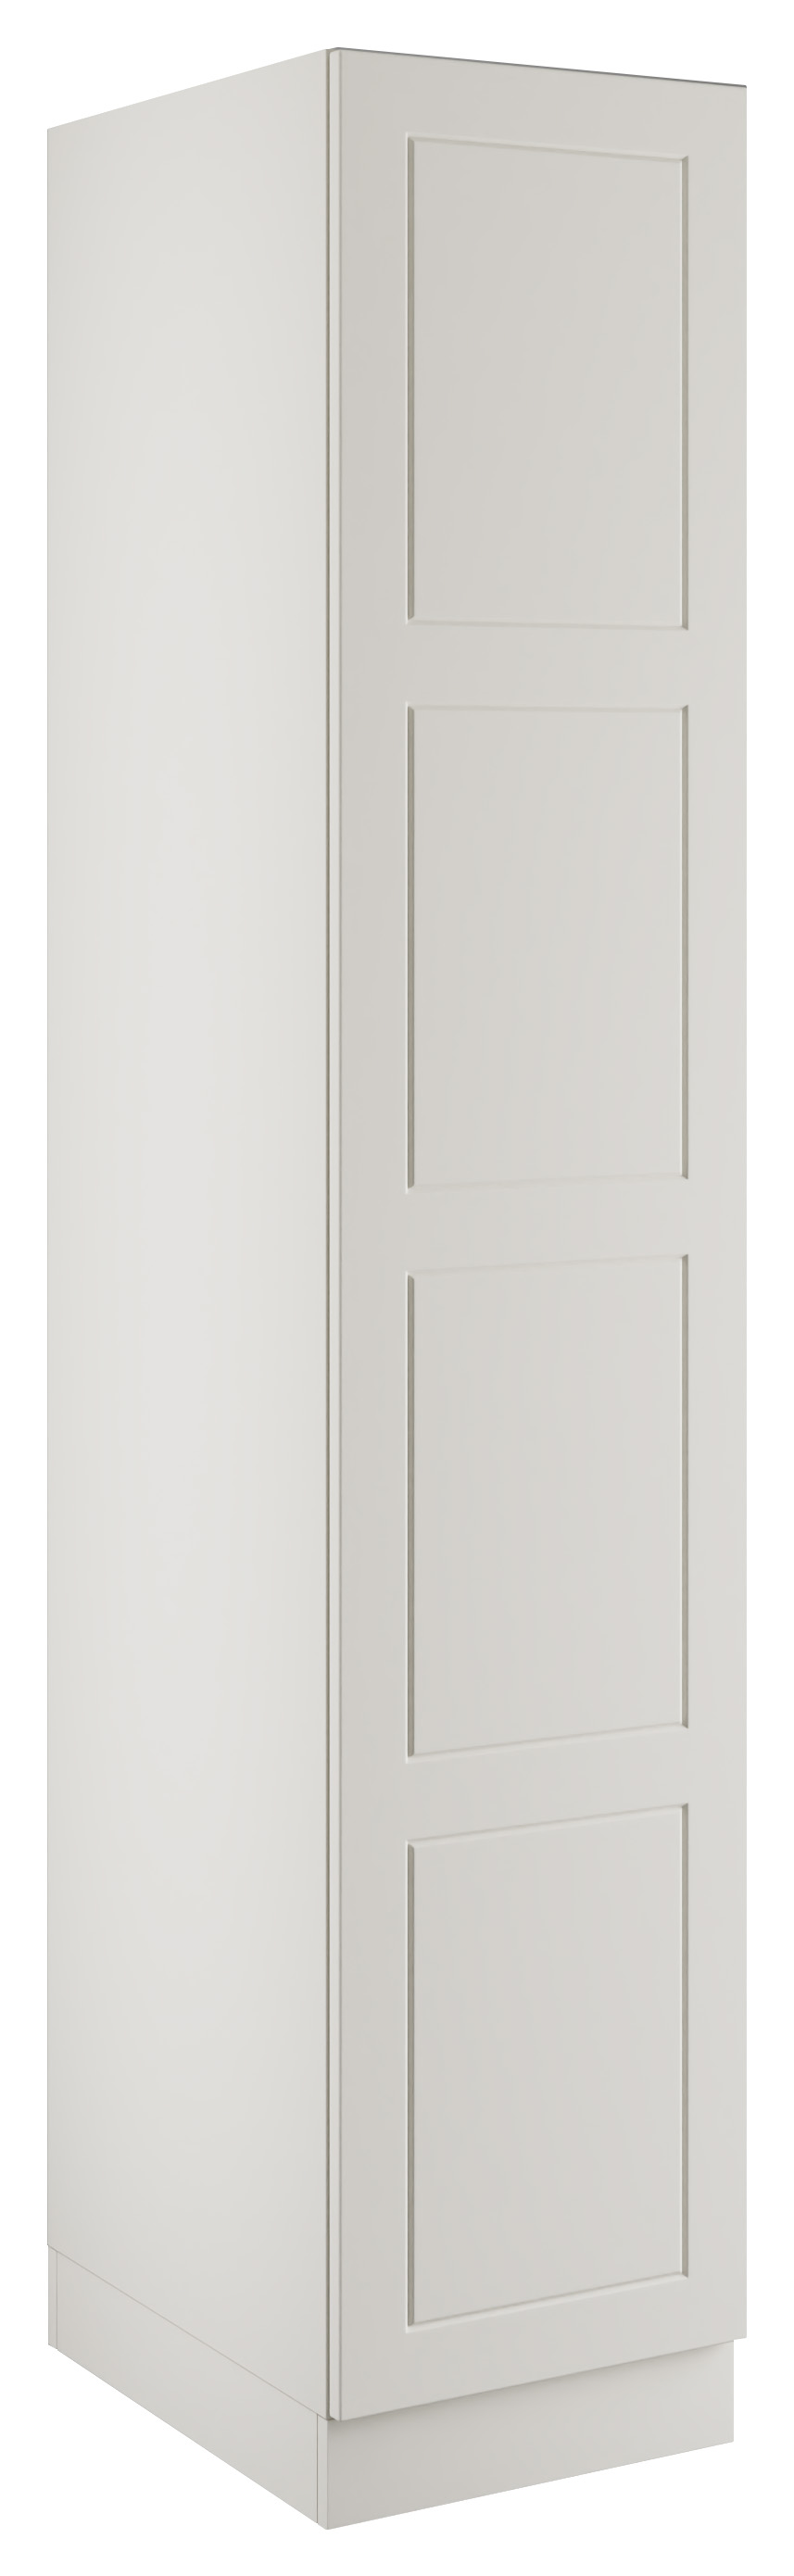 Bramham White Single Wardrobe with Shelves - 450 x 2260 x 608mm